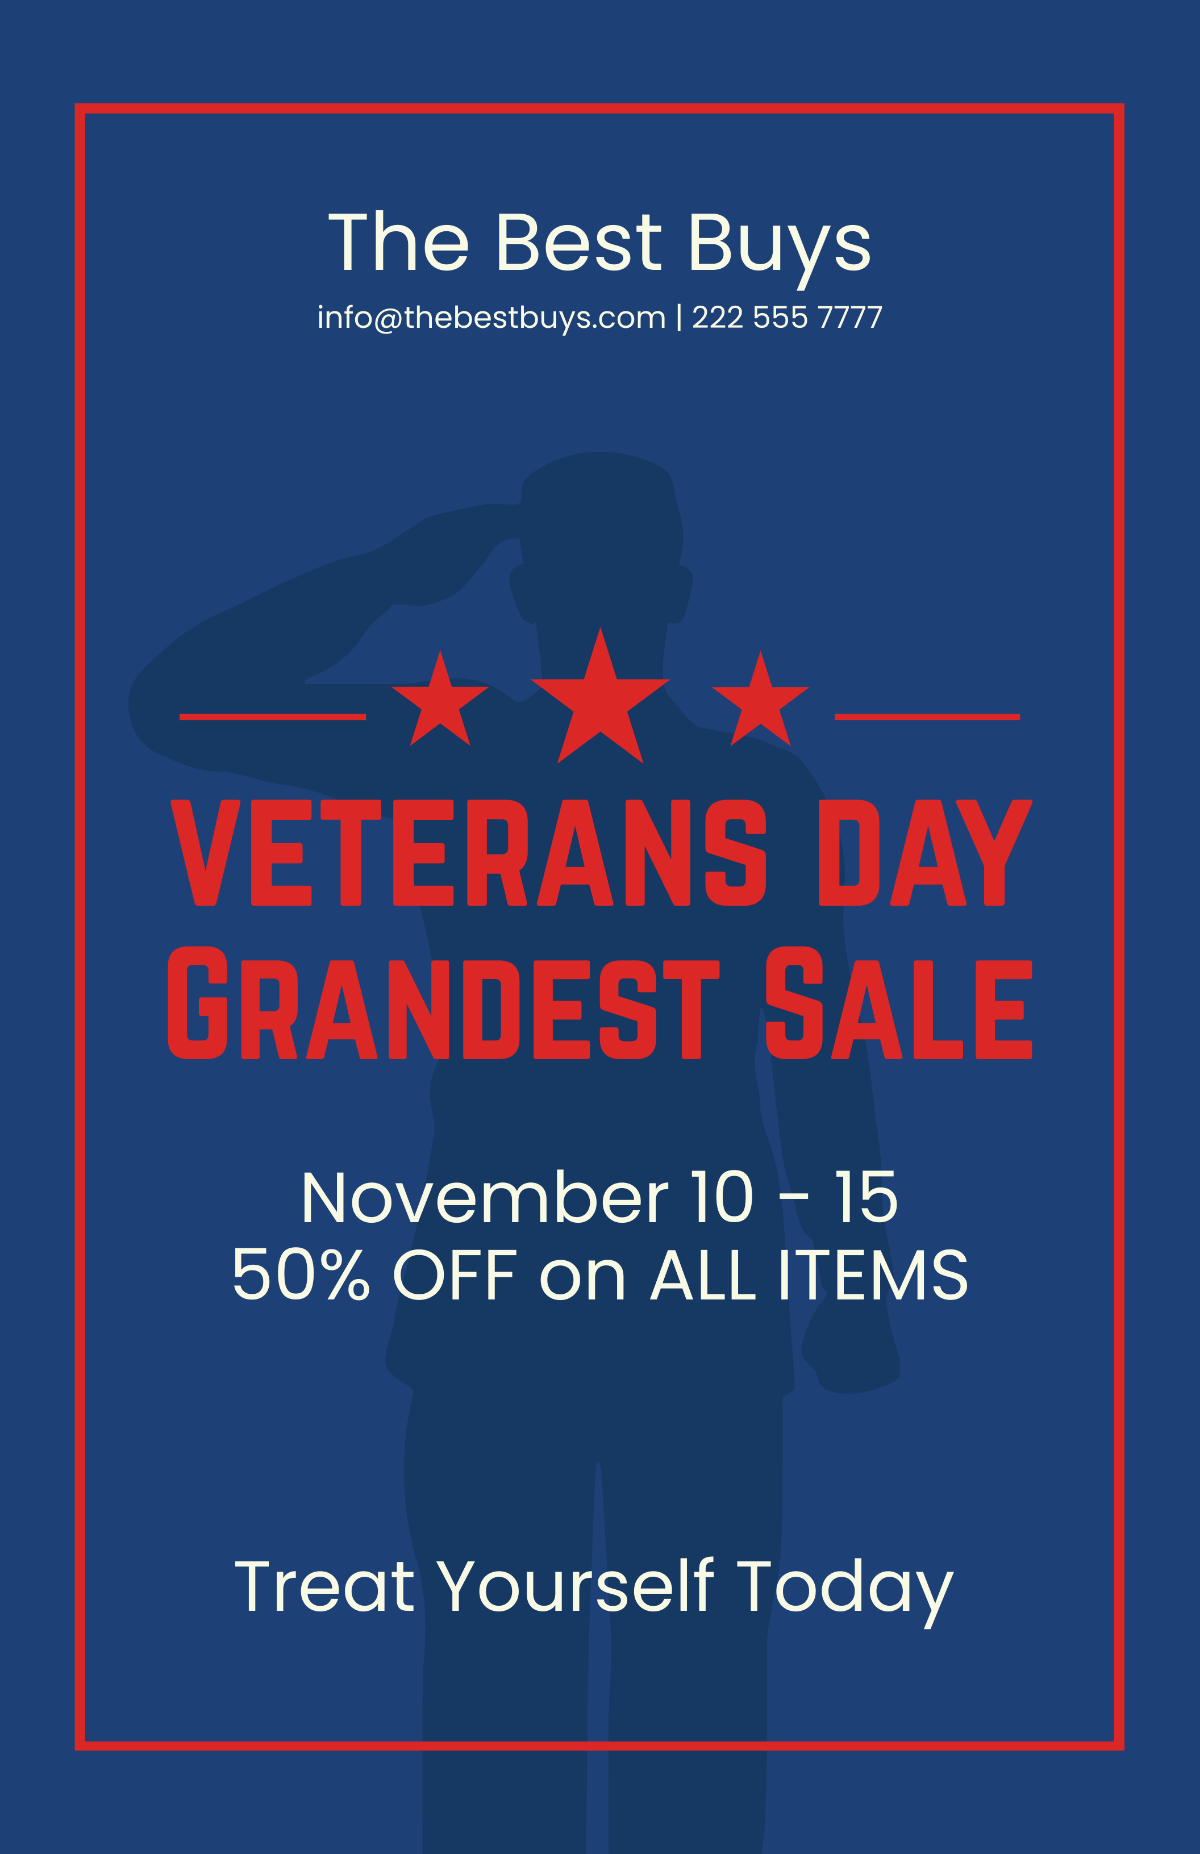 Veterans Day Advertisement Poster Template